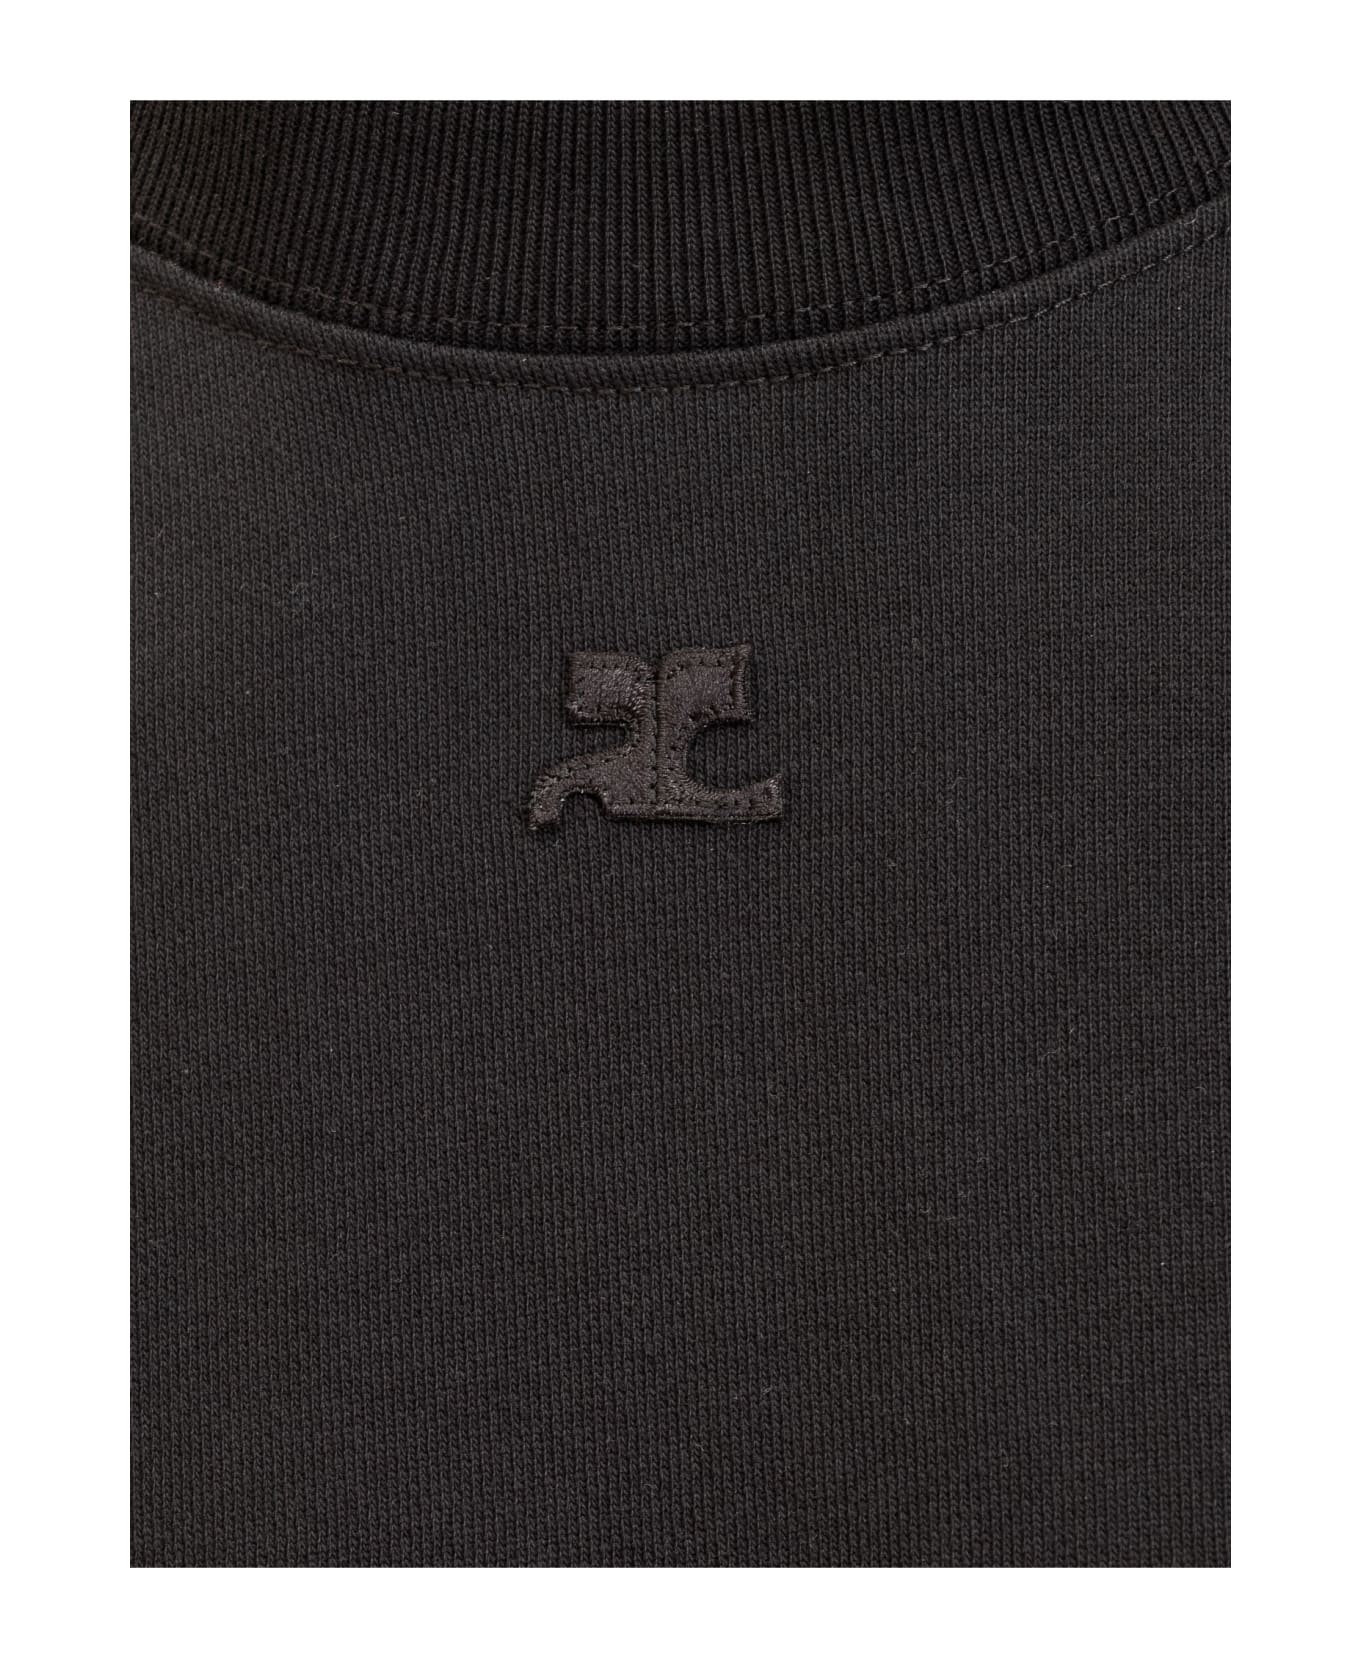 Courrèges Sweatshirt With Logo - BLACK